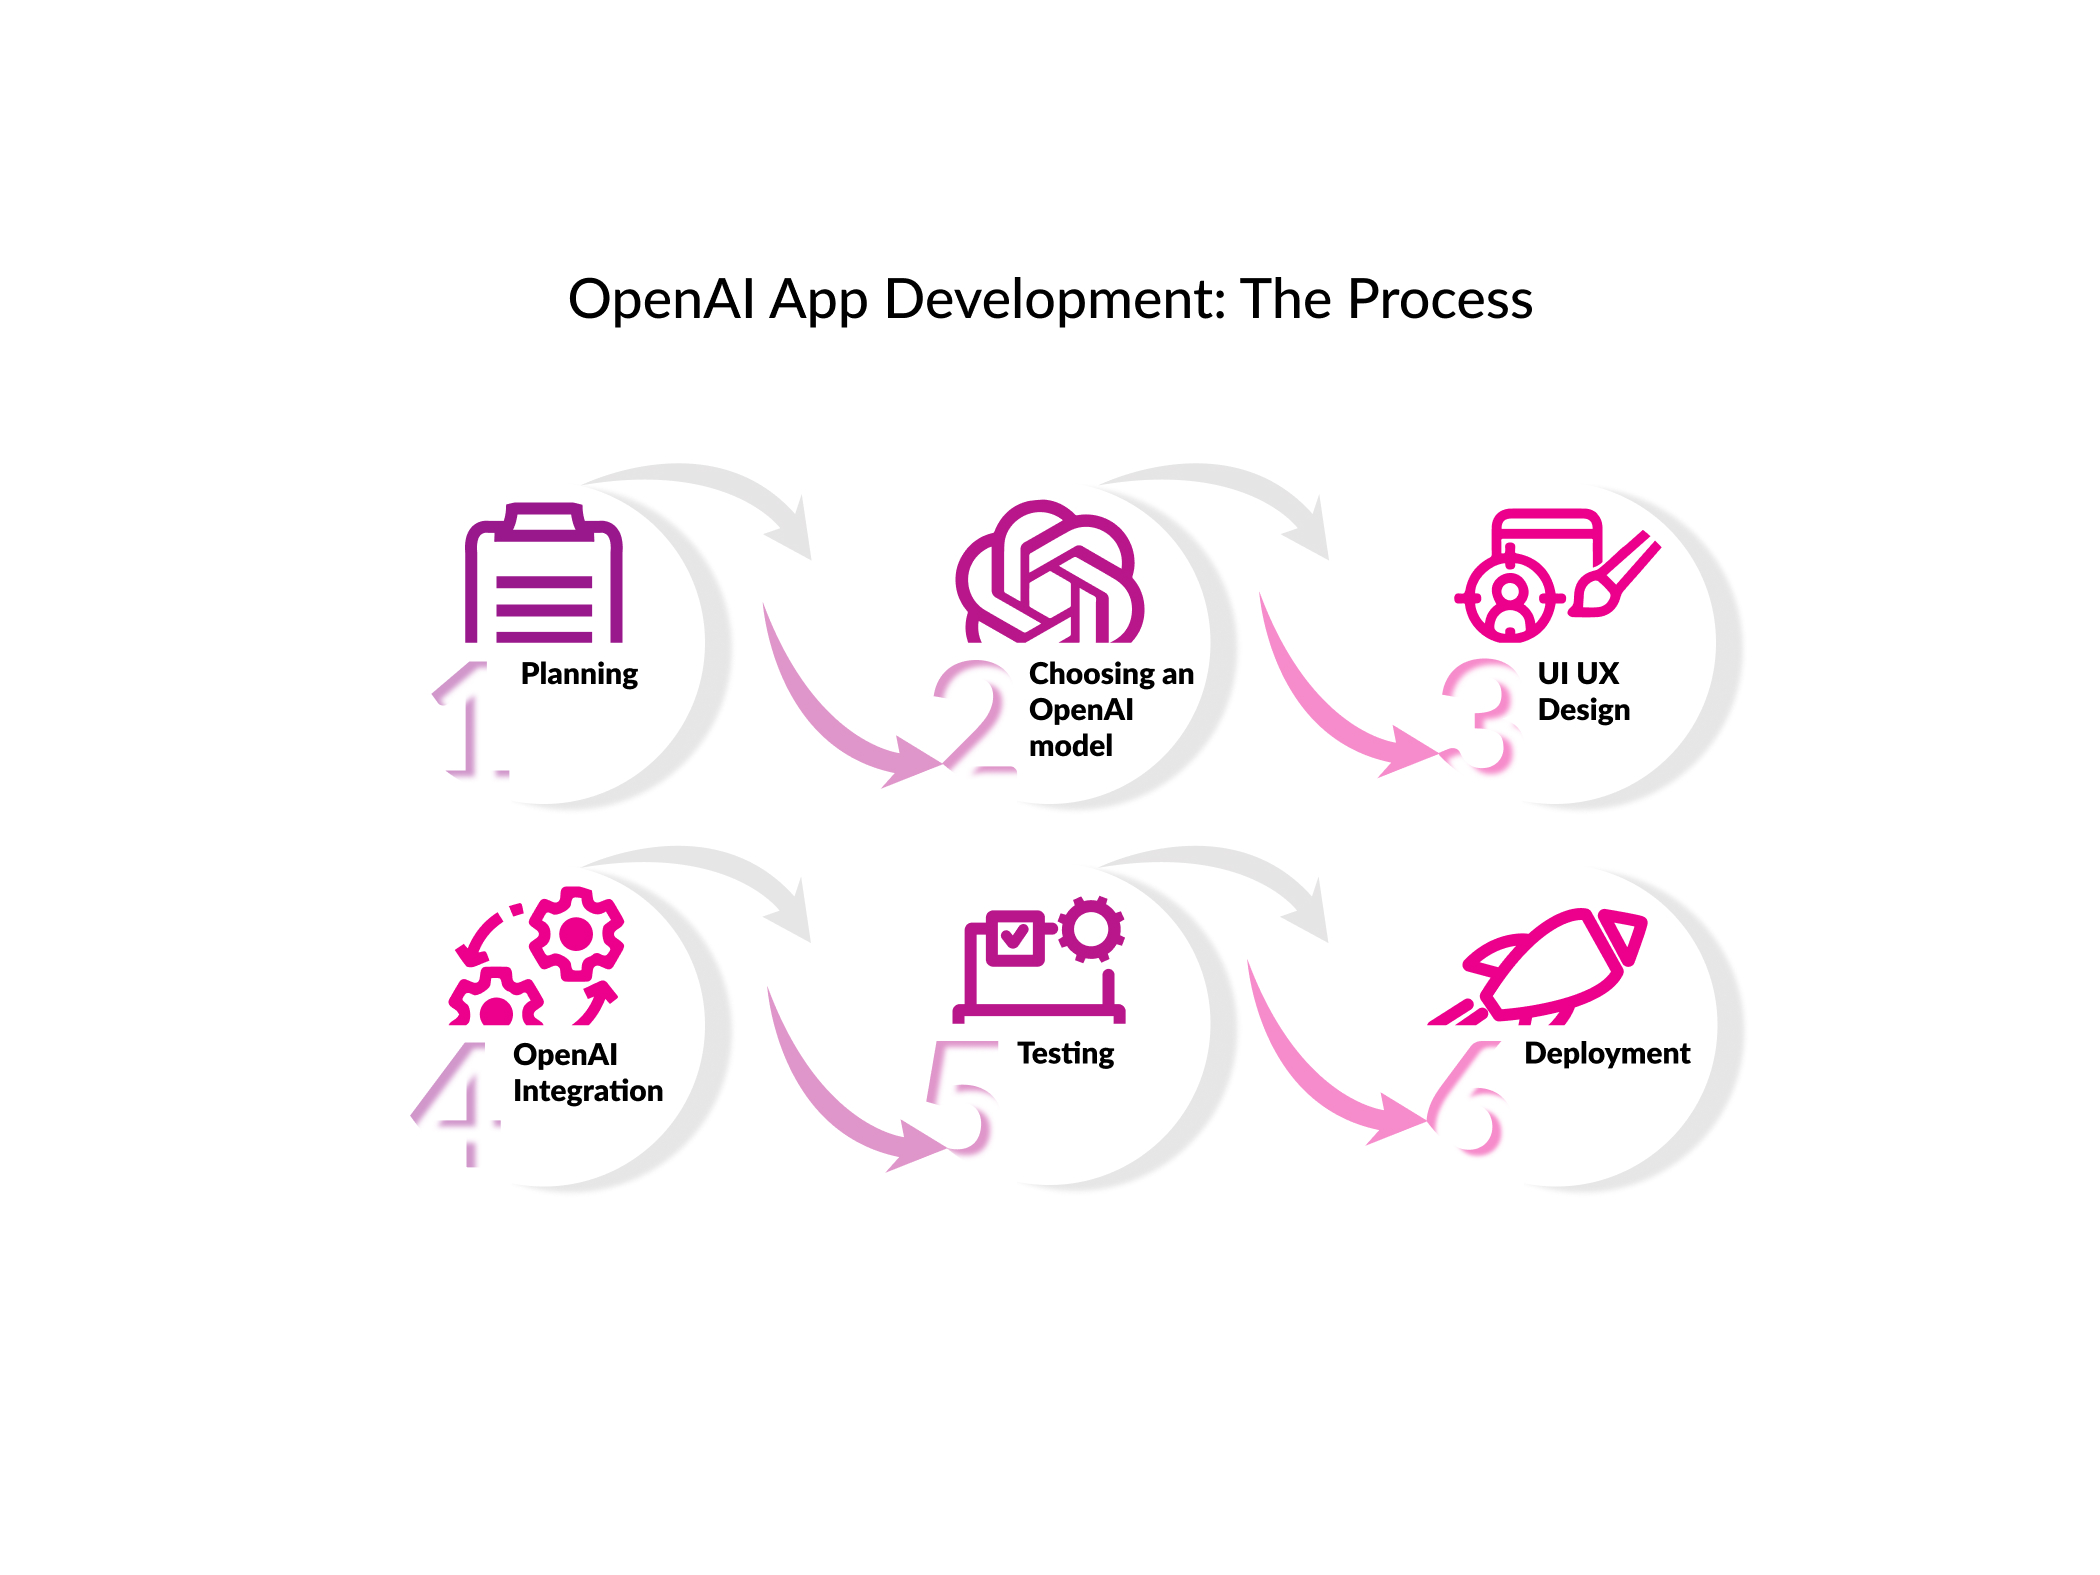 OpenAI app development process